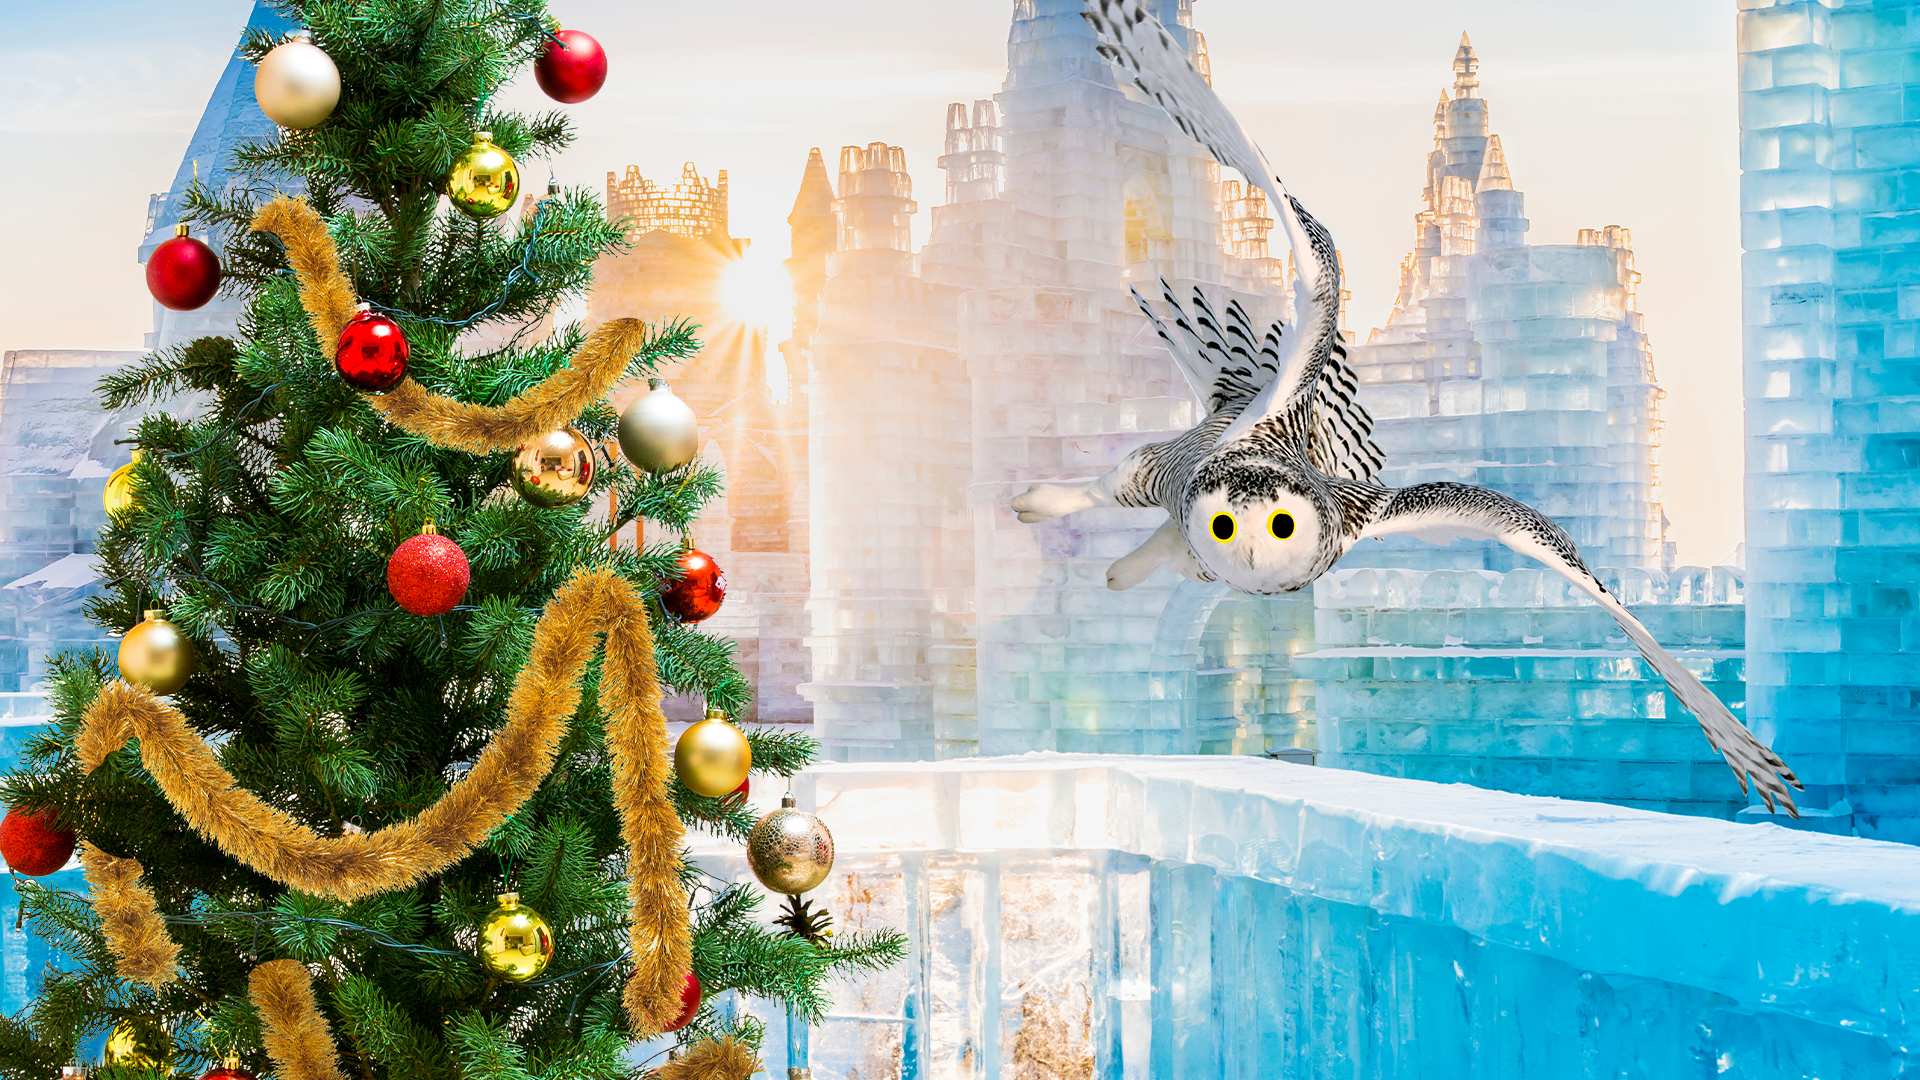 Ice palace with Beano owl and Christmas tree